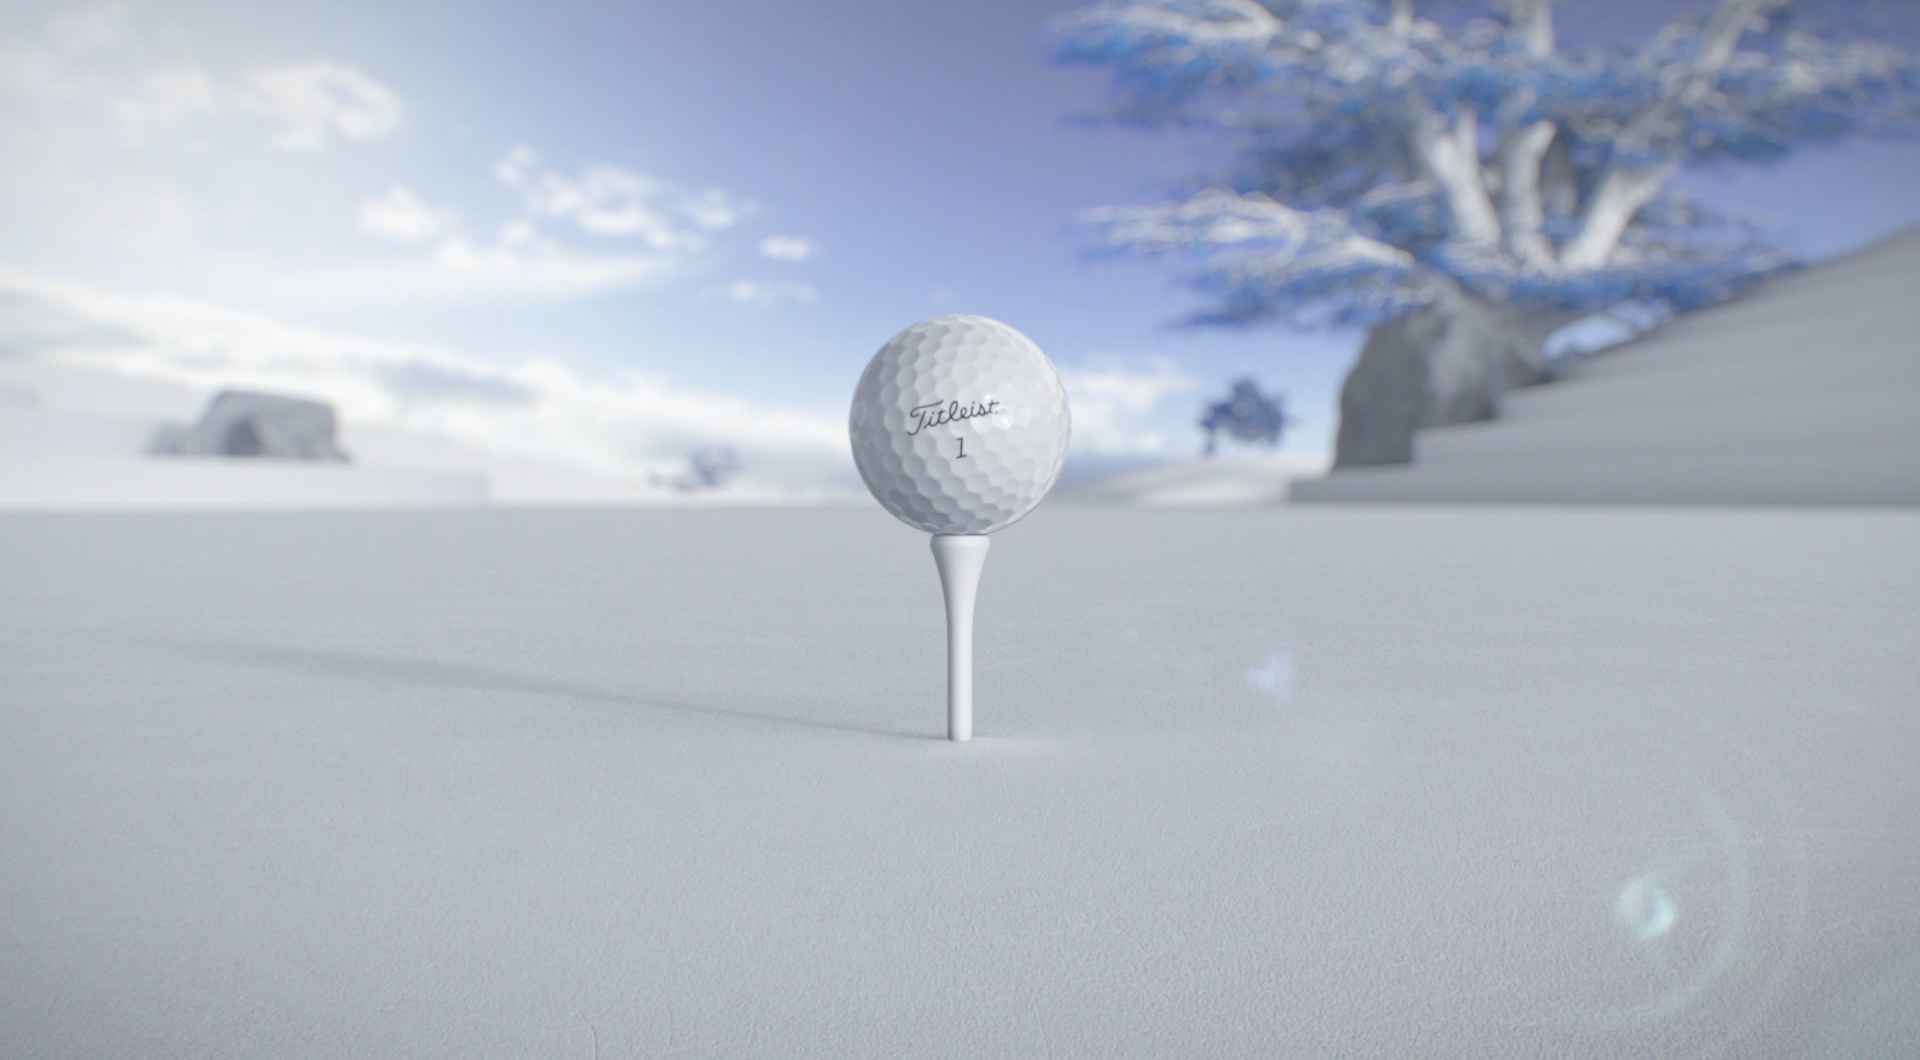 Tigrelab_White_Golf_Course_11